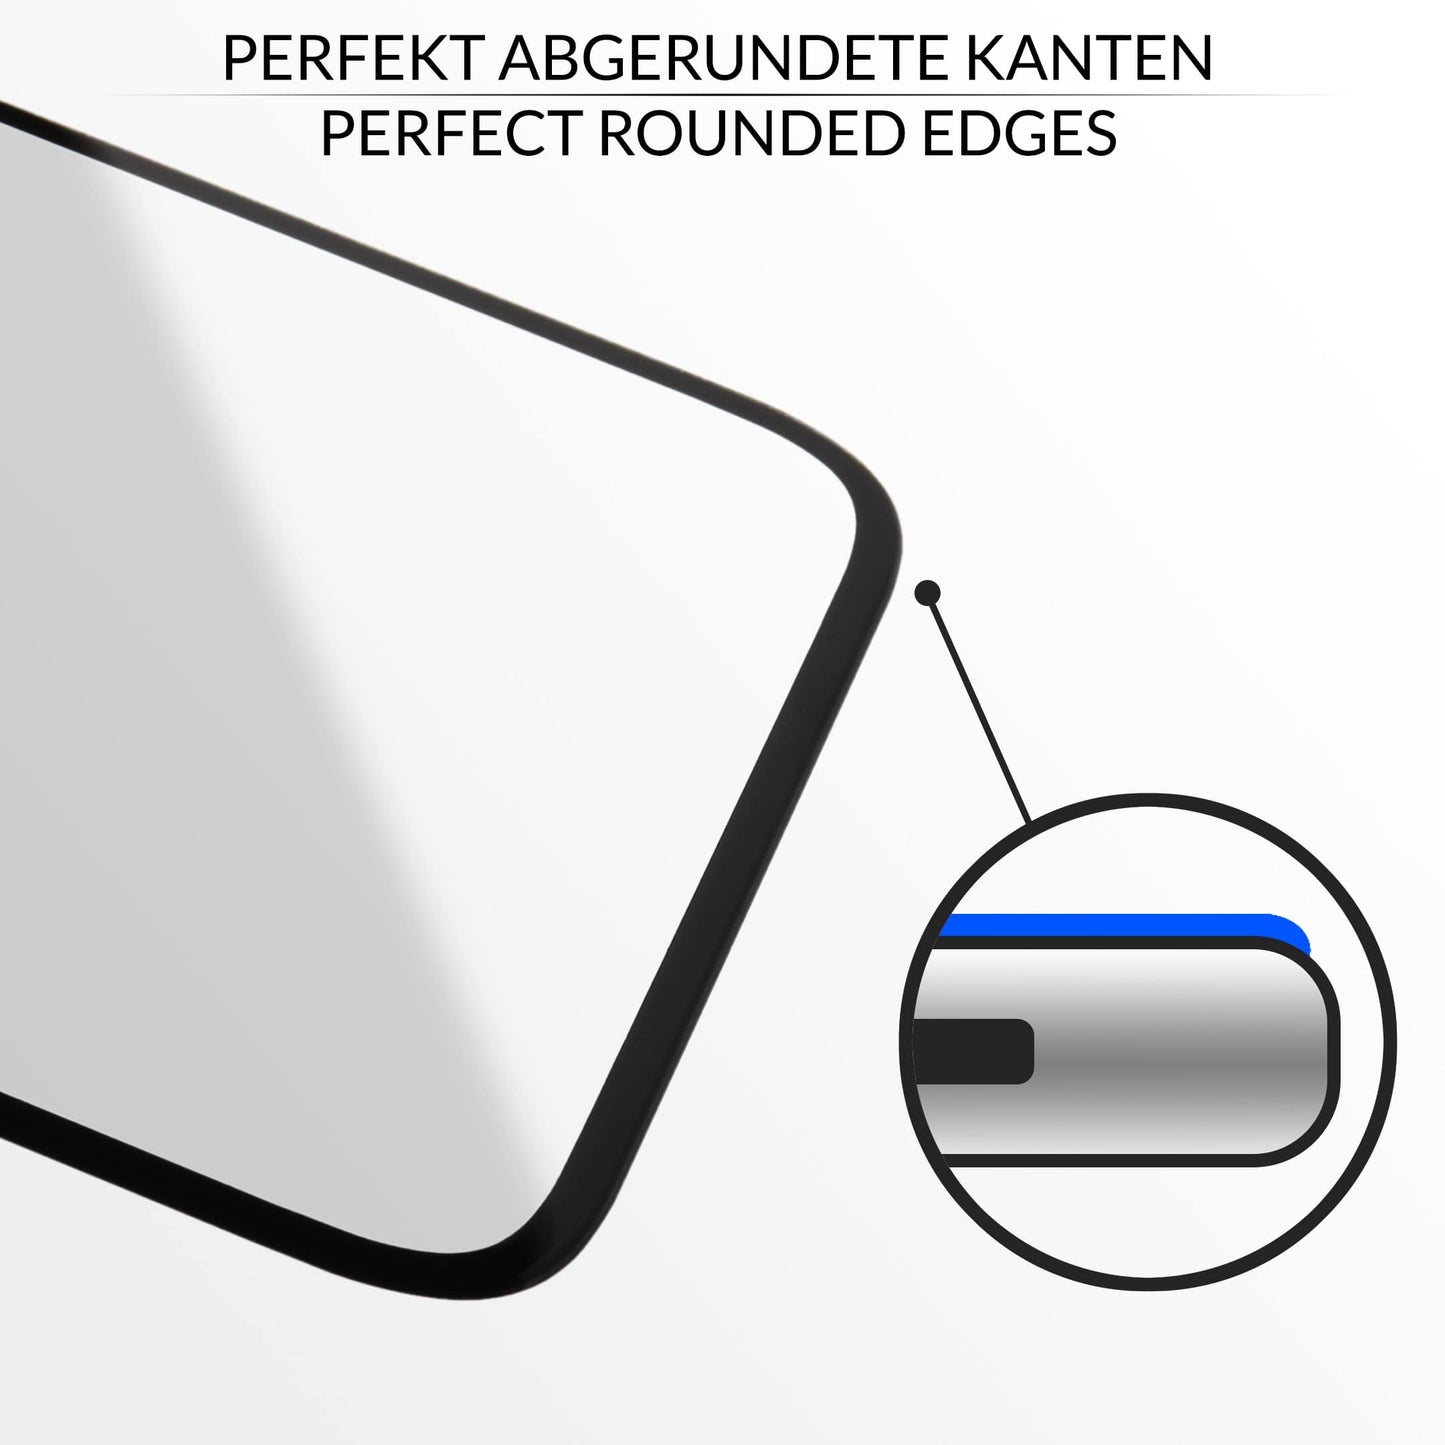 iPhone 8 - sapphire glass